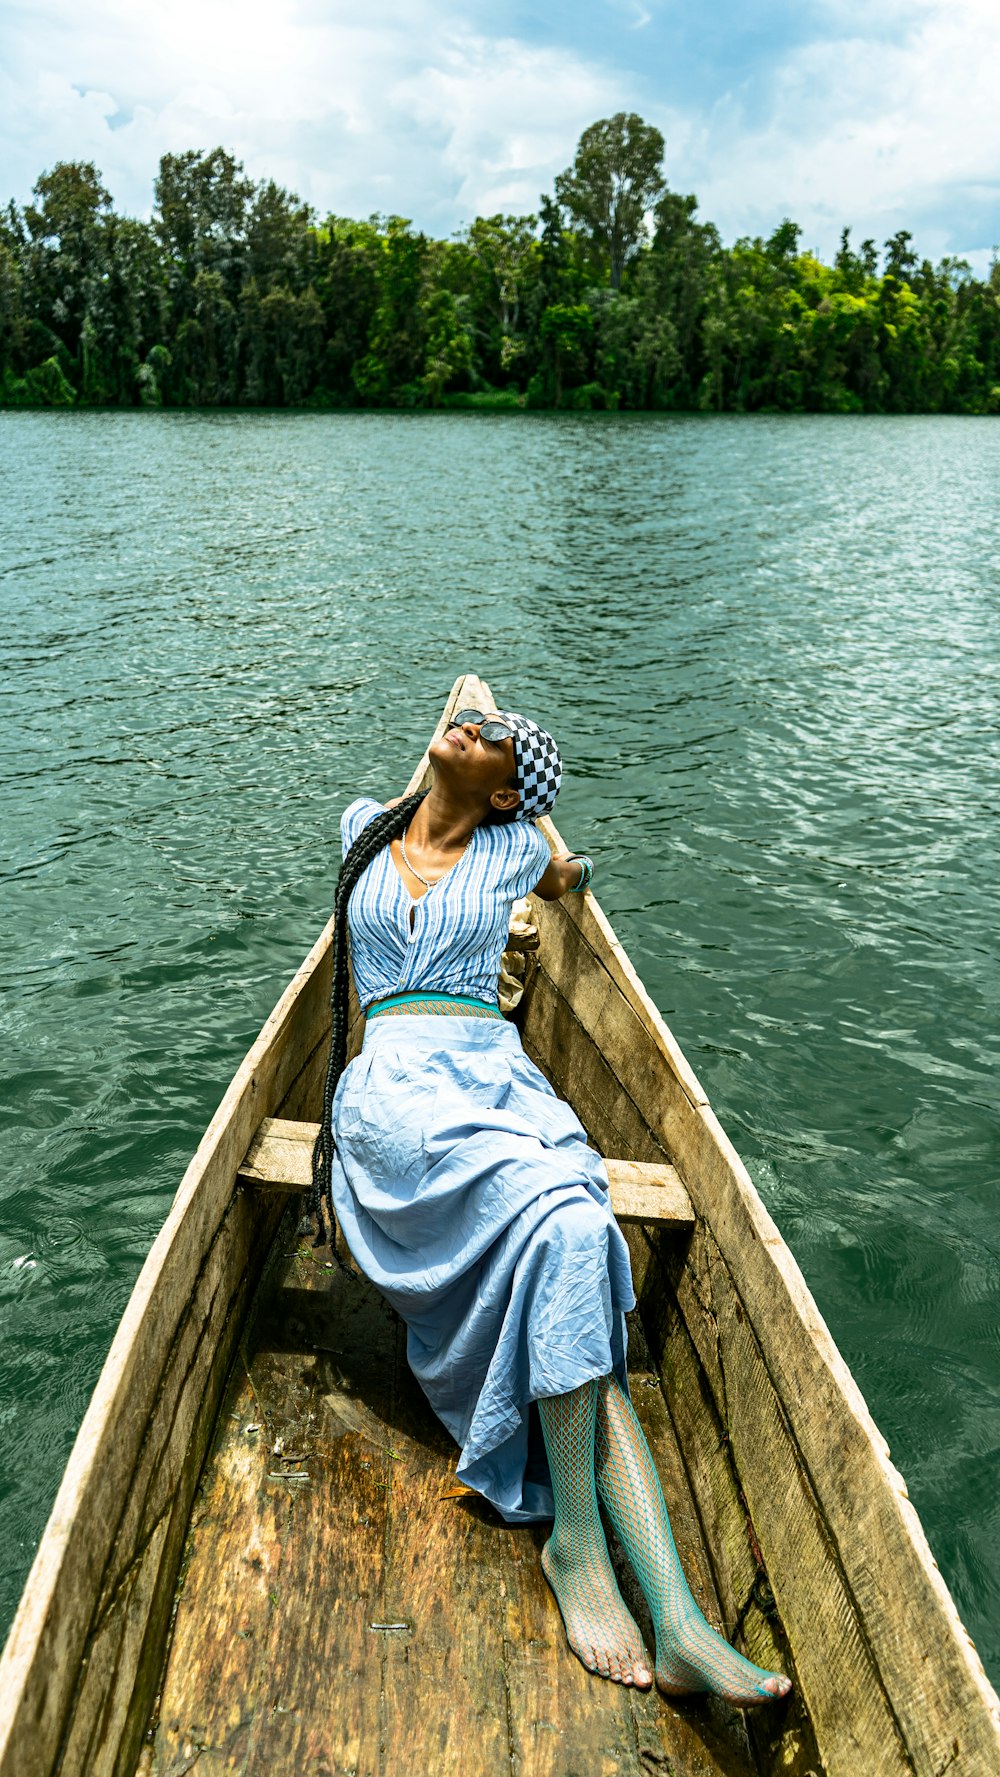 a woman in a blue dress is sitting in a boat